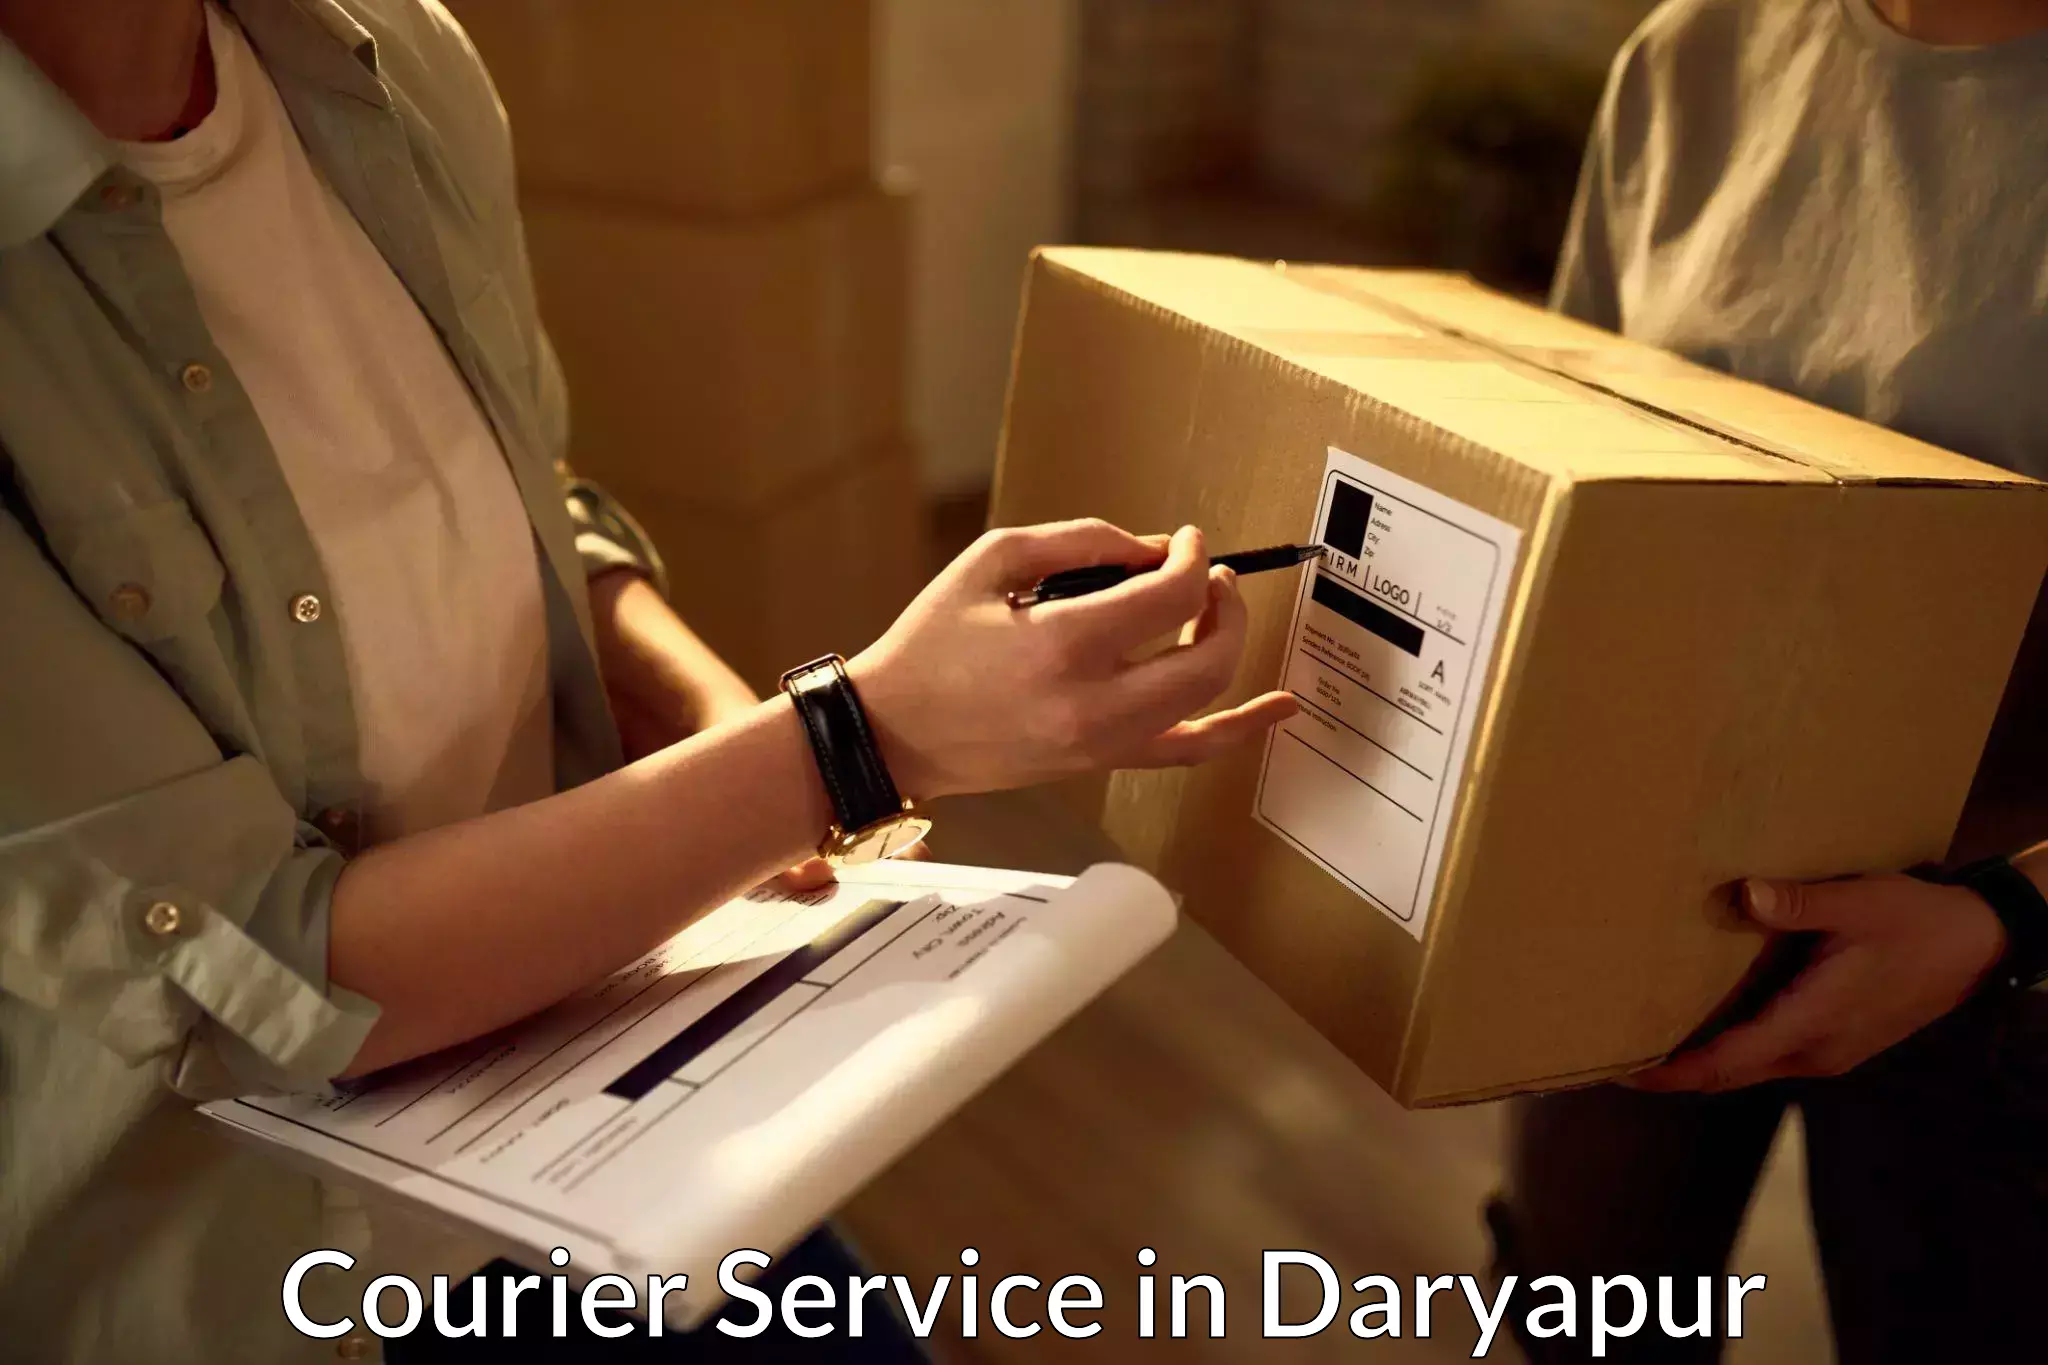 Affordable international shipping in Daryapur